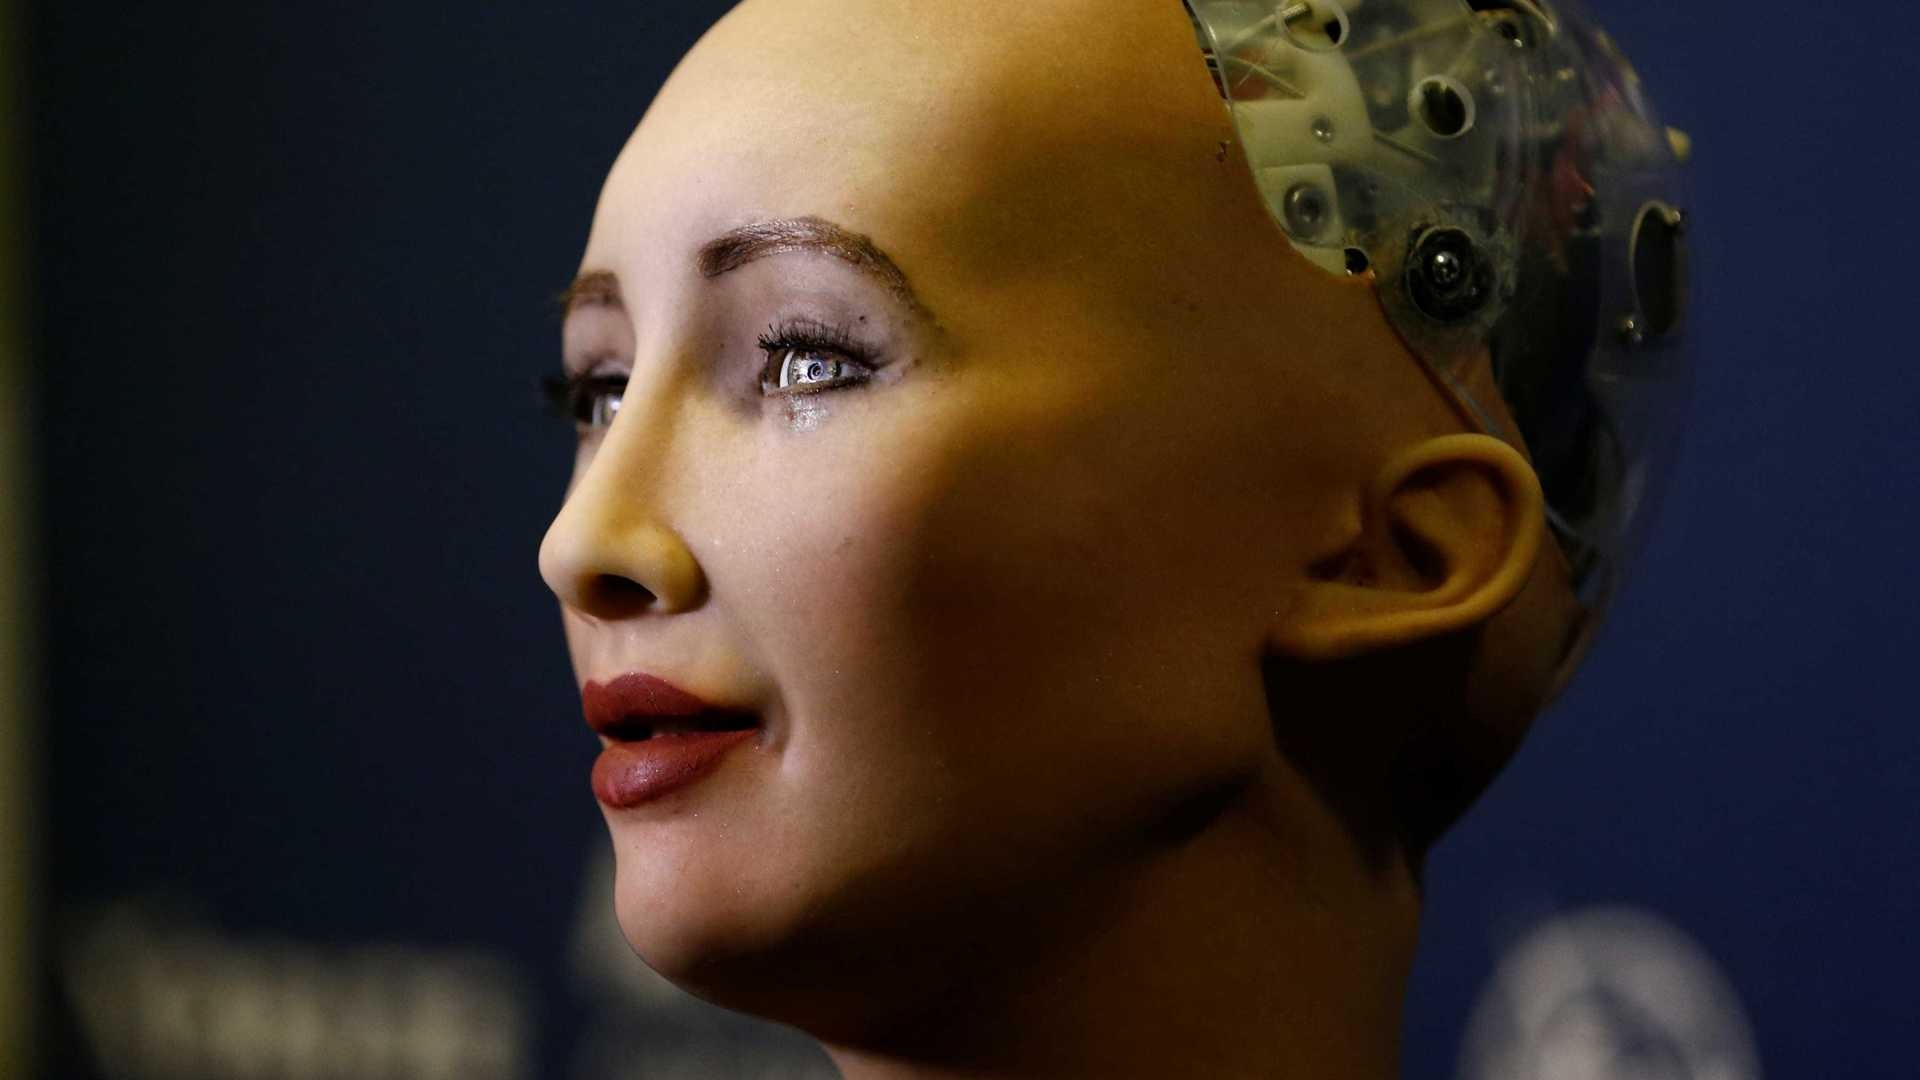 Facebook critica robô Sophia: 'É uma farsa completa'